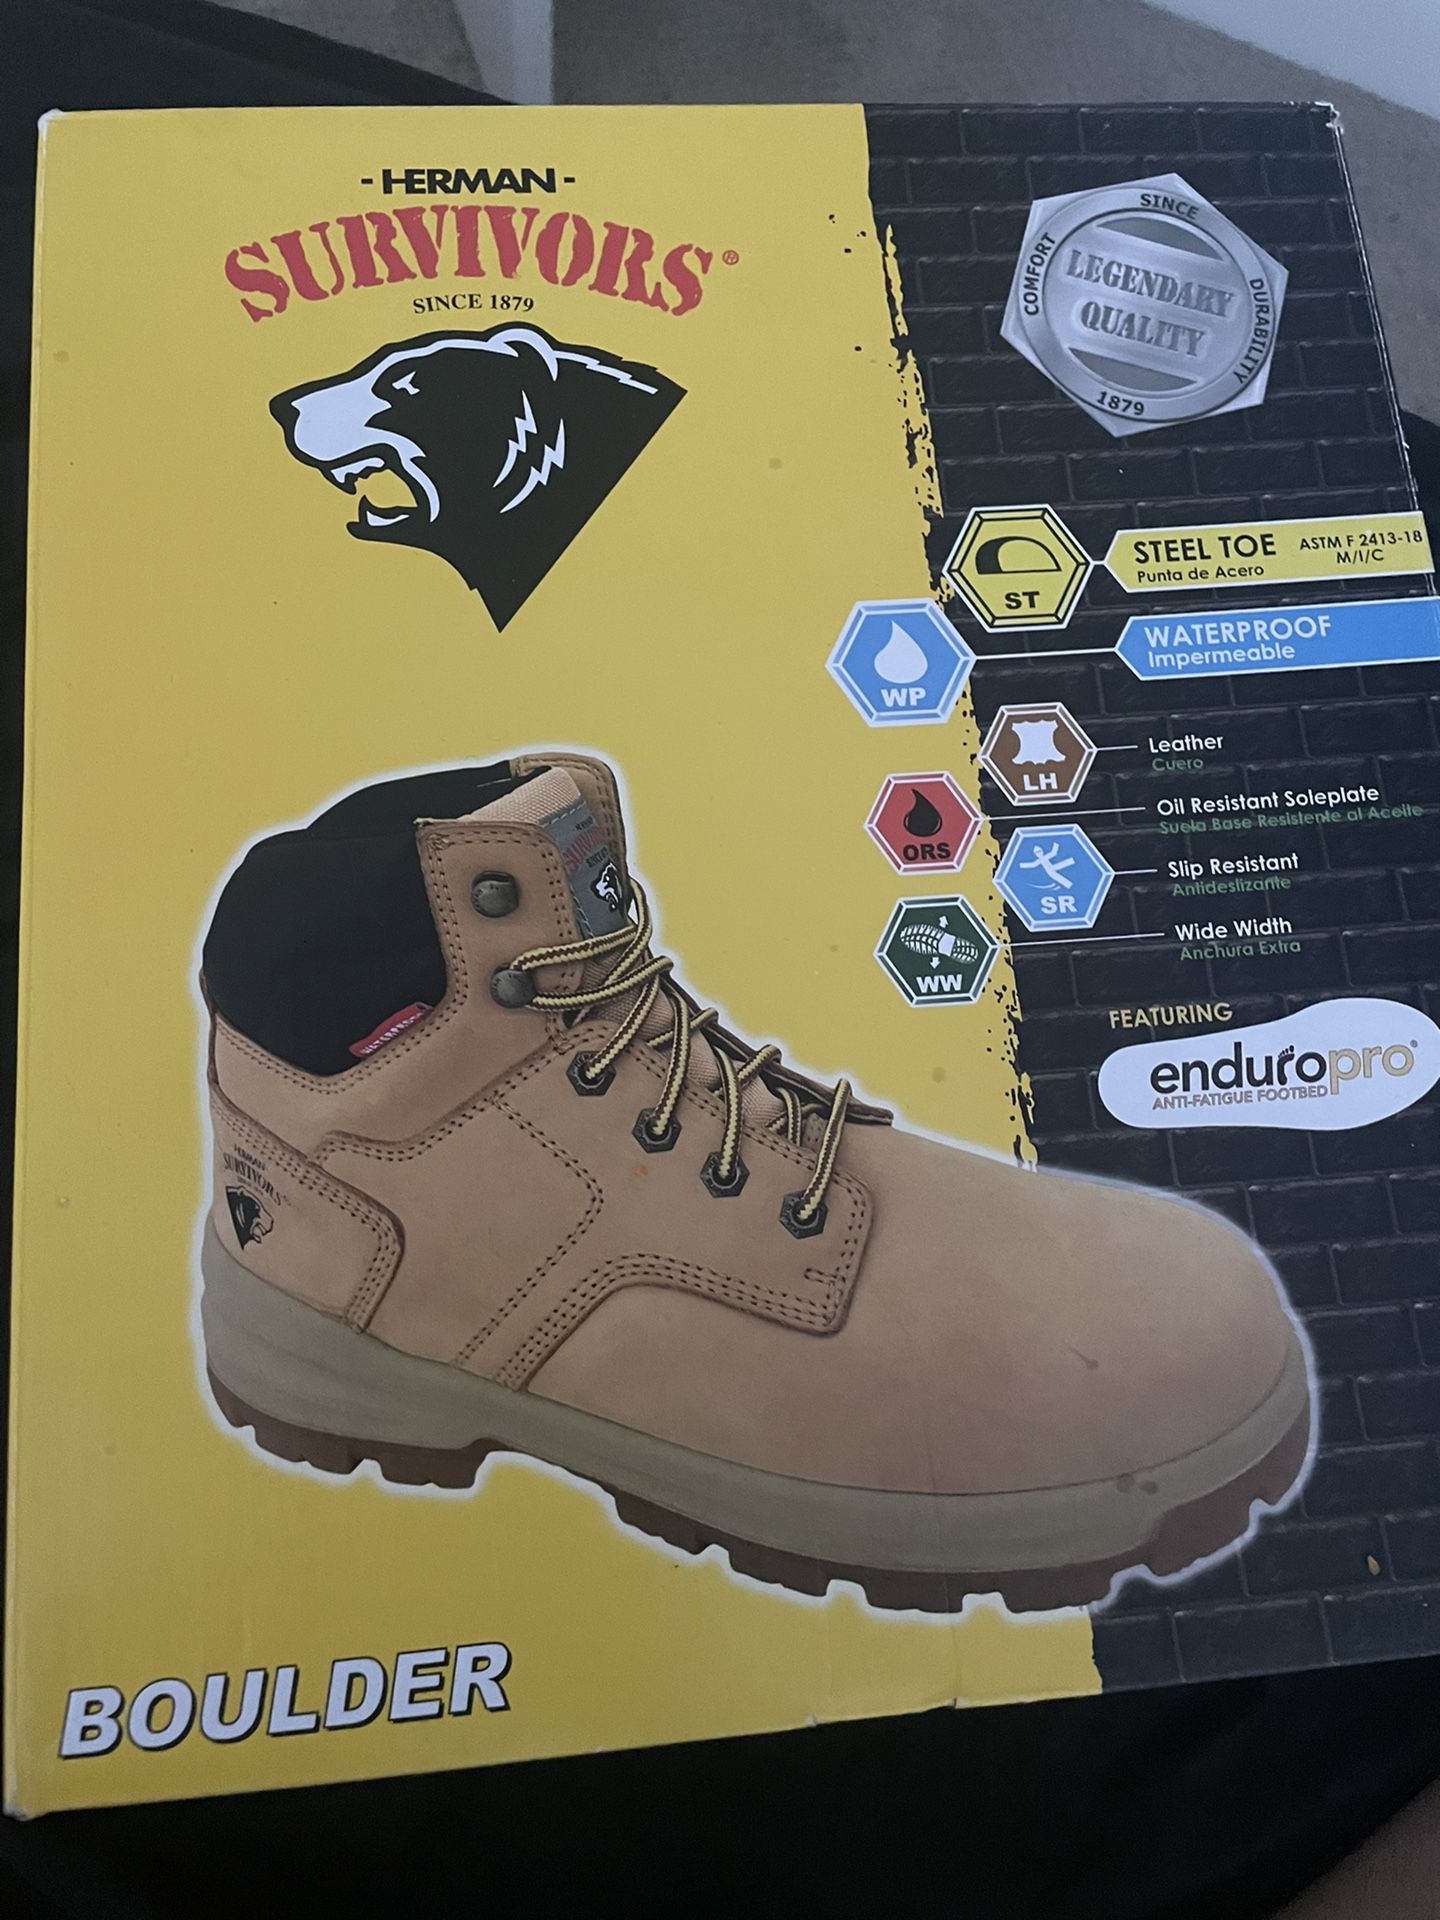 Size 6 steel toe work boots